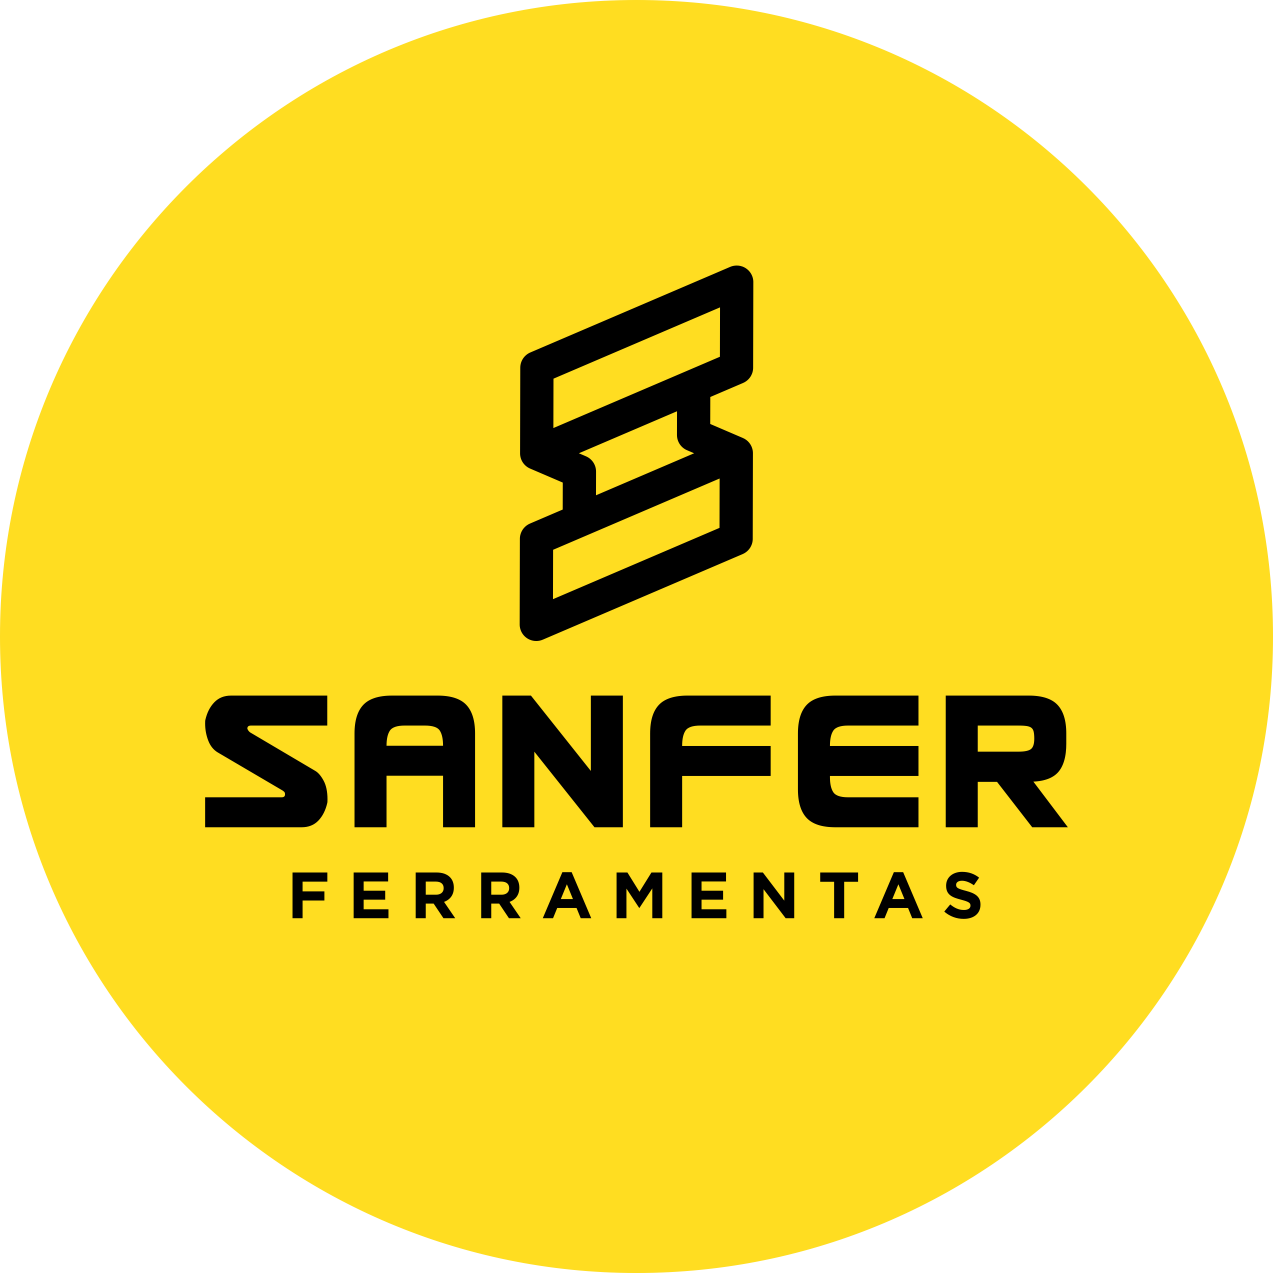 Sanfer